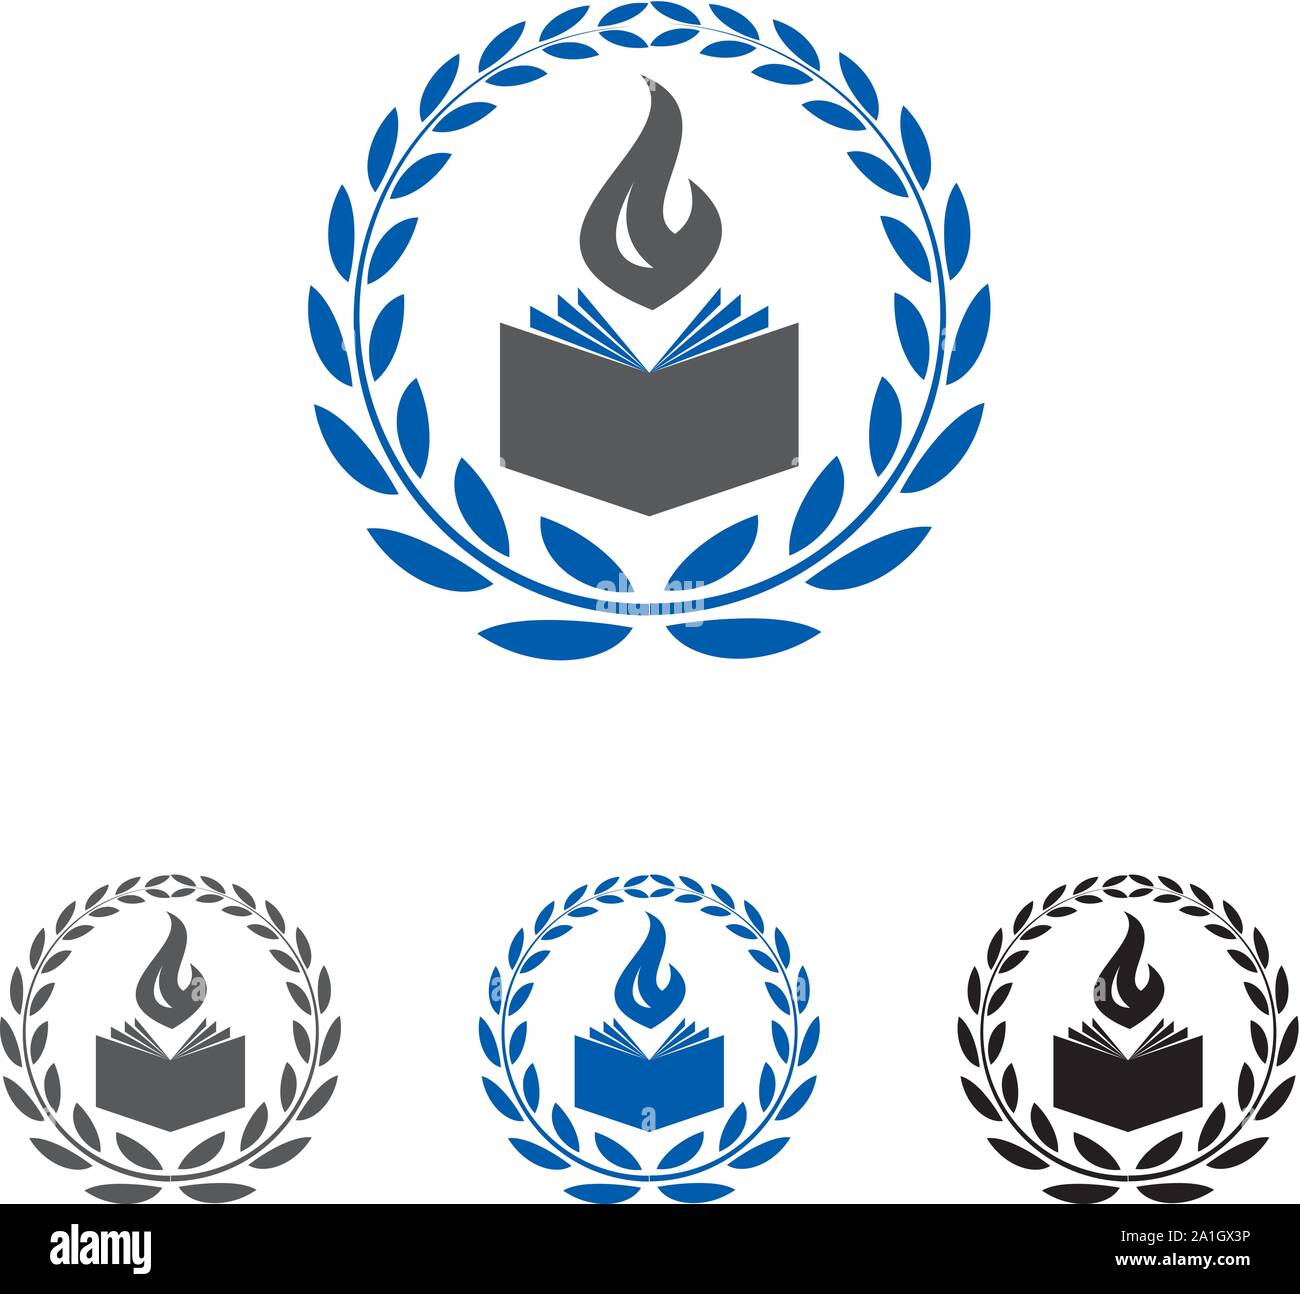 Education Logo Template. Swoosh modern education logo series, Business Education Logo, book logo, book logo inspiration, School logo design template. Stock Vector